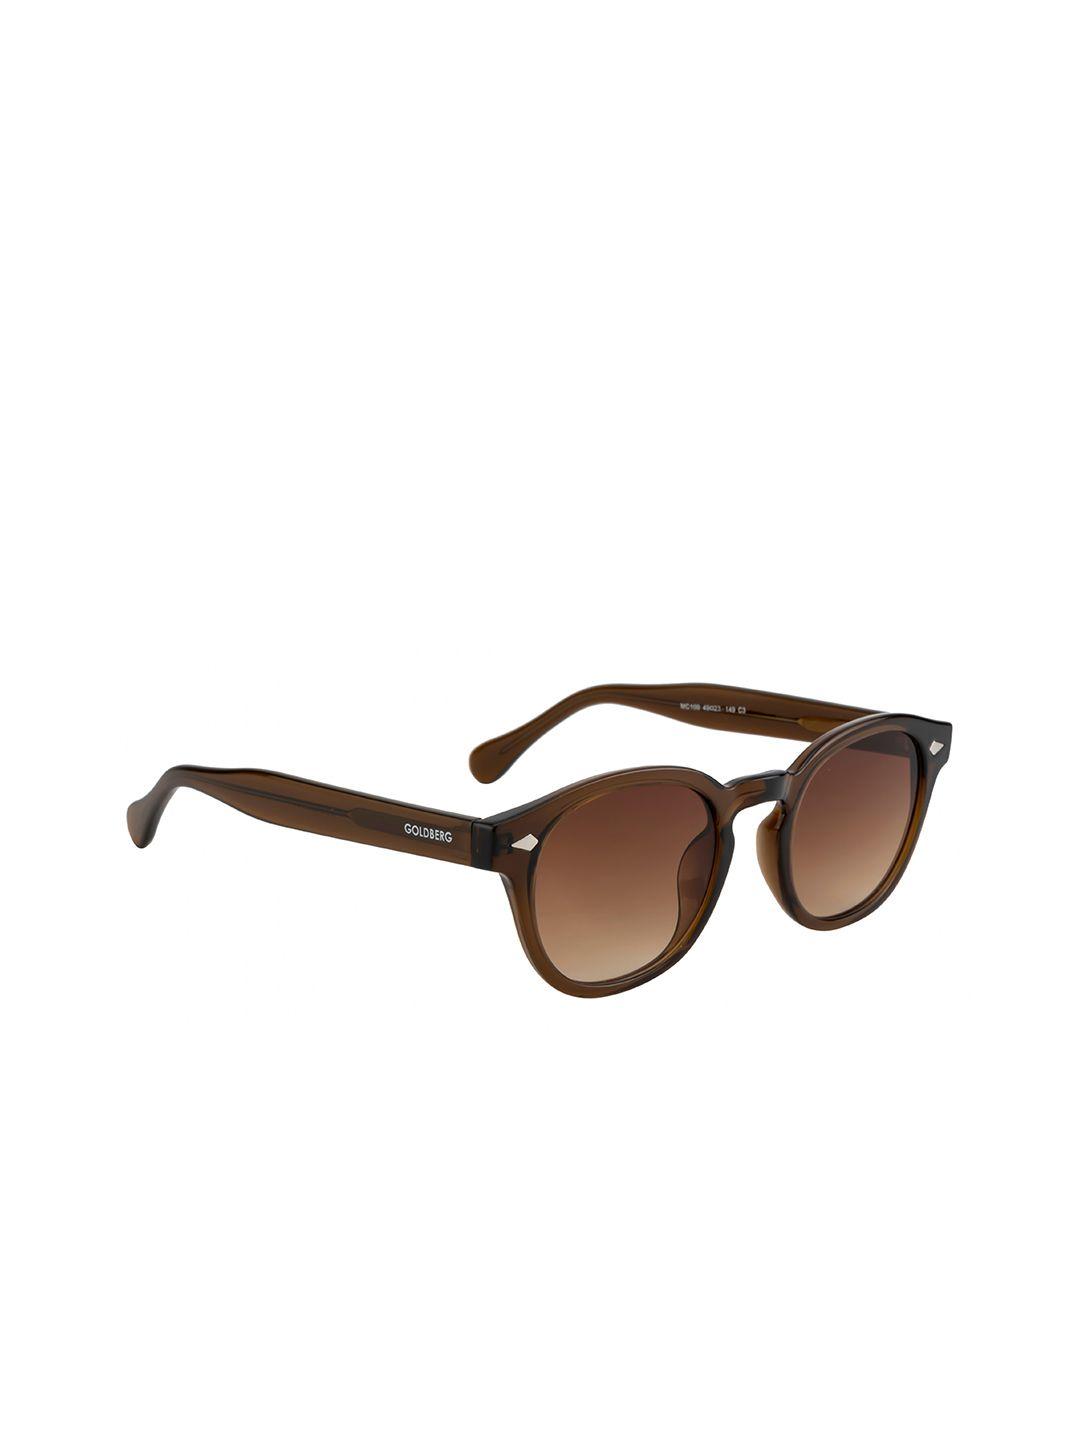 gold berg unisex brown lens & brown wayfarer sunglasses with uv protected lens